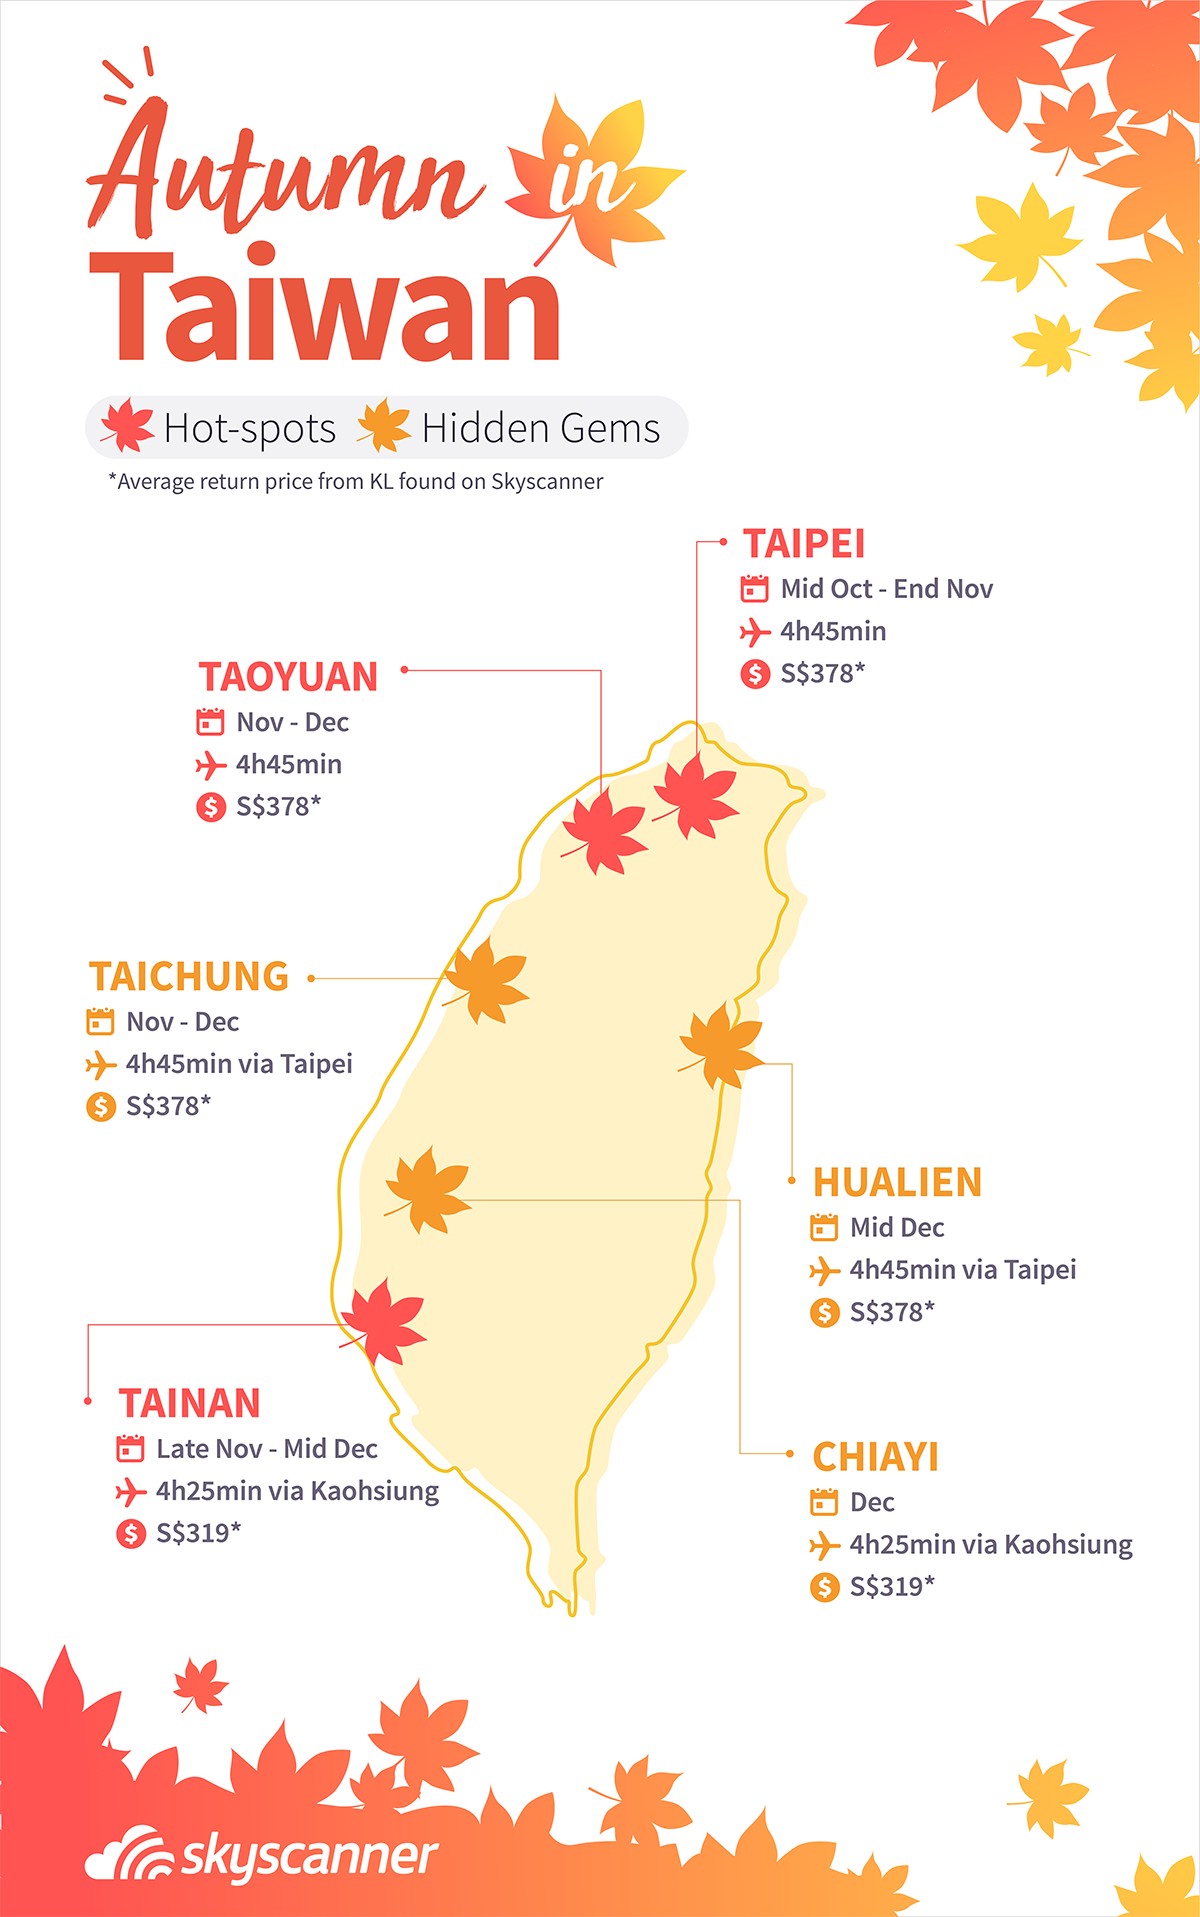 taiwan fall foliage forecast 2019